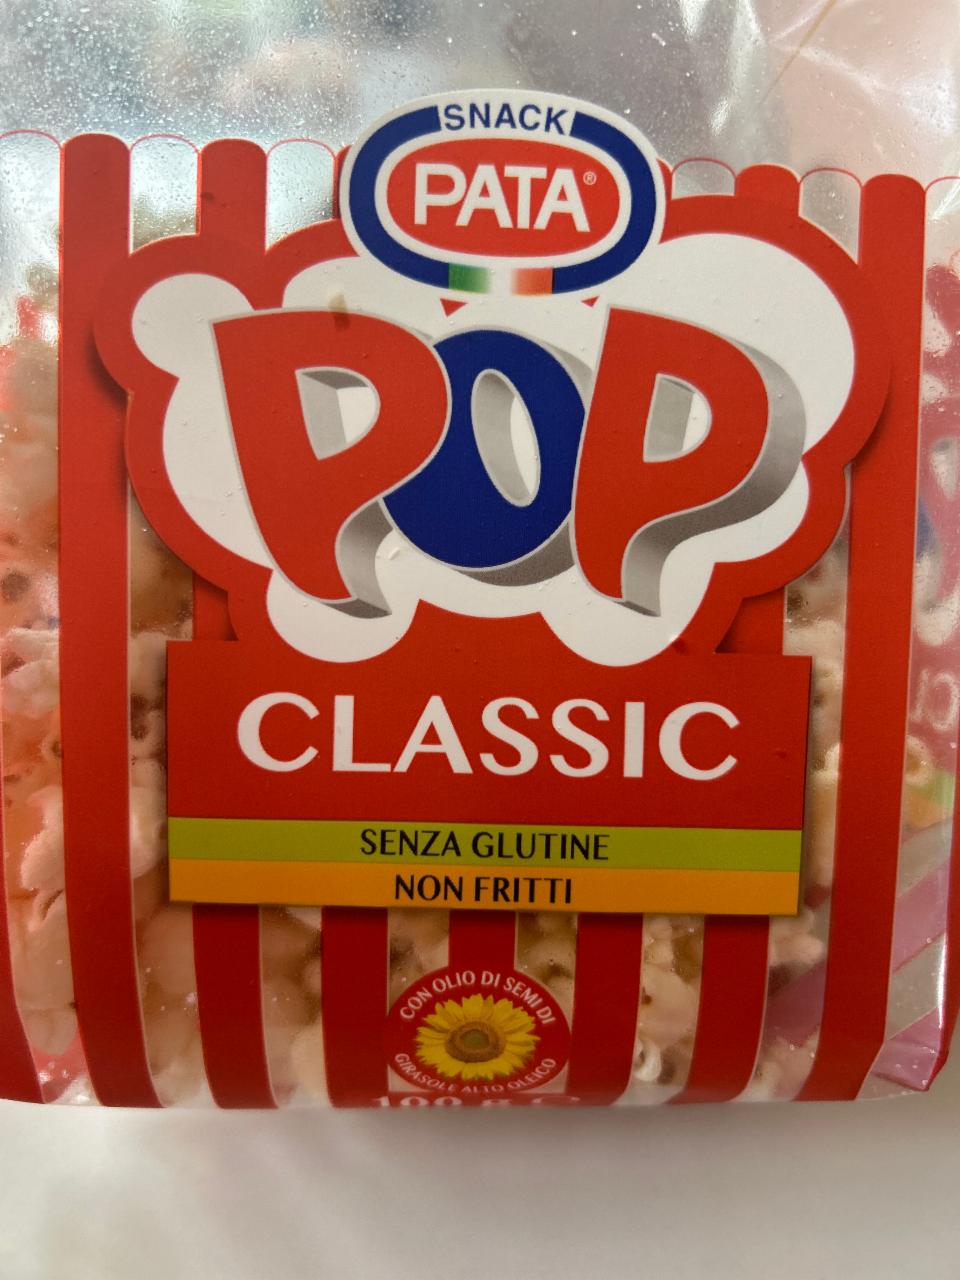 Fotografie - Pop classic Snack Pata